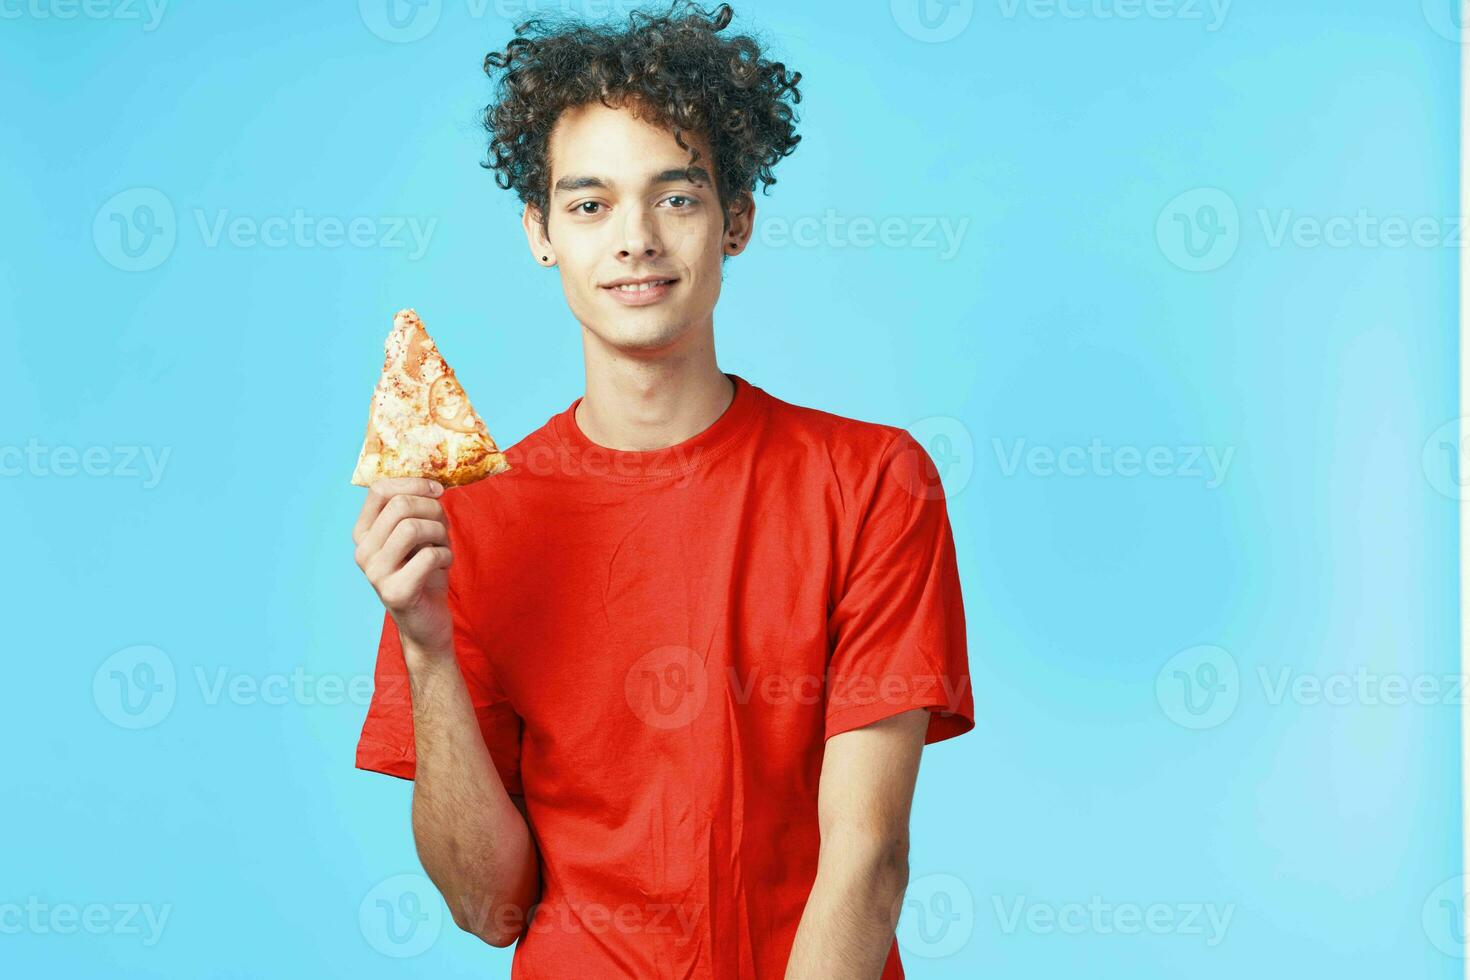 rolig lockigt kille i en röd t-shirt pizza leverans snabb mat mellanmål foto